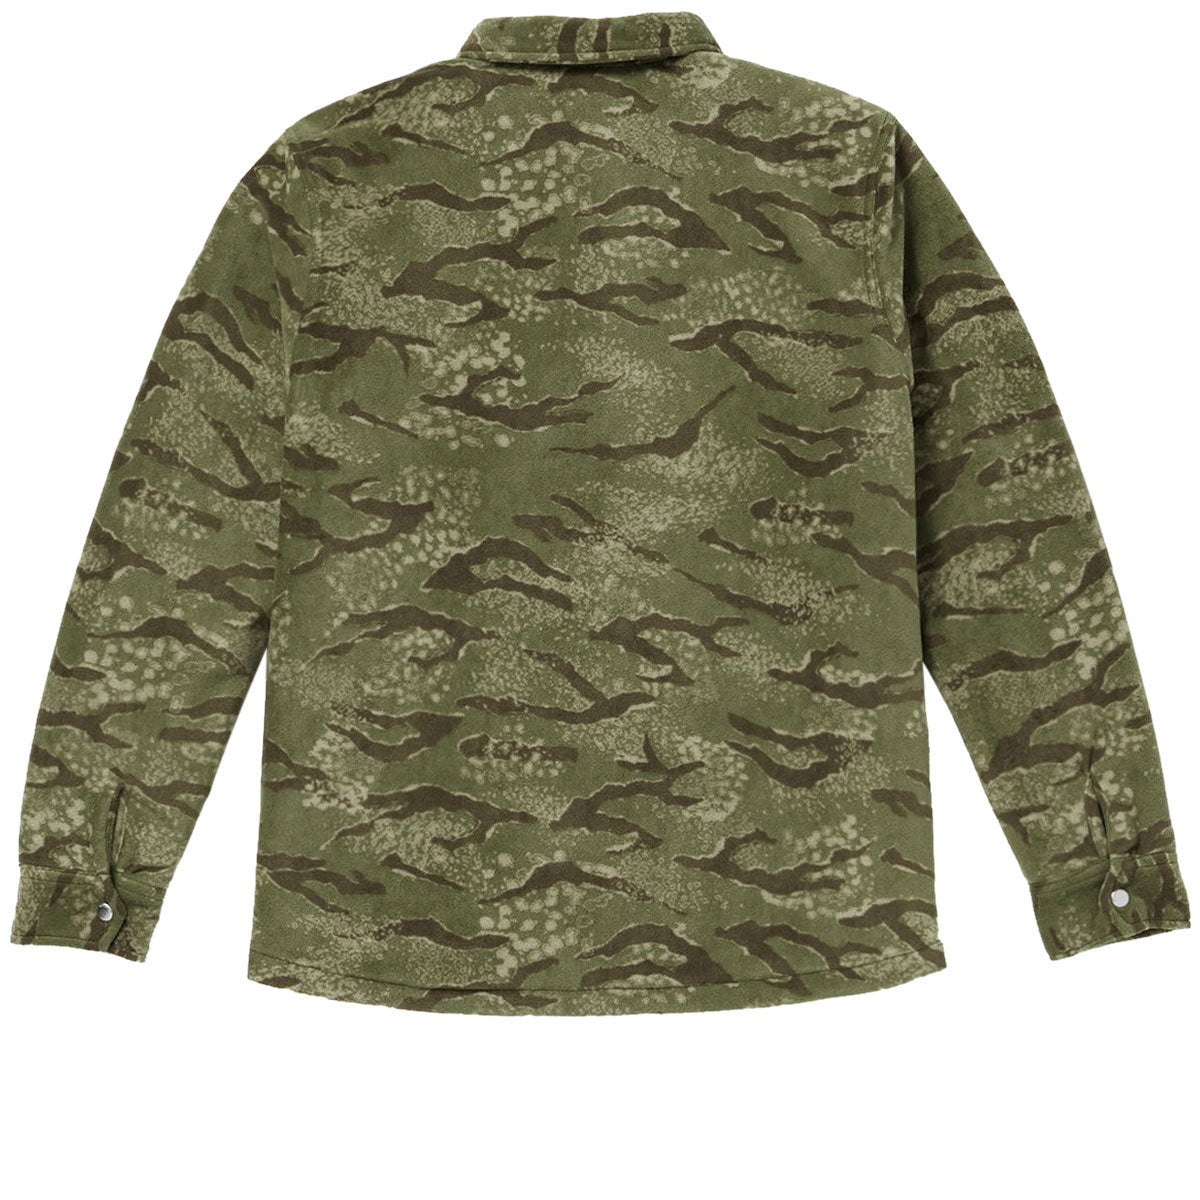 Volcom Bowered Fleece Long Sleeve Sweatshirt - Squadron Green image 2